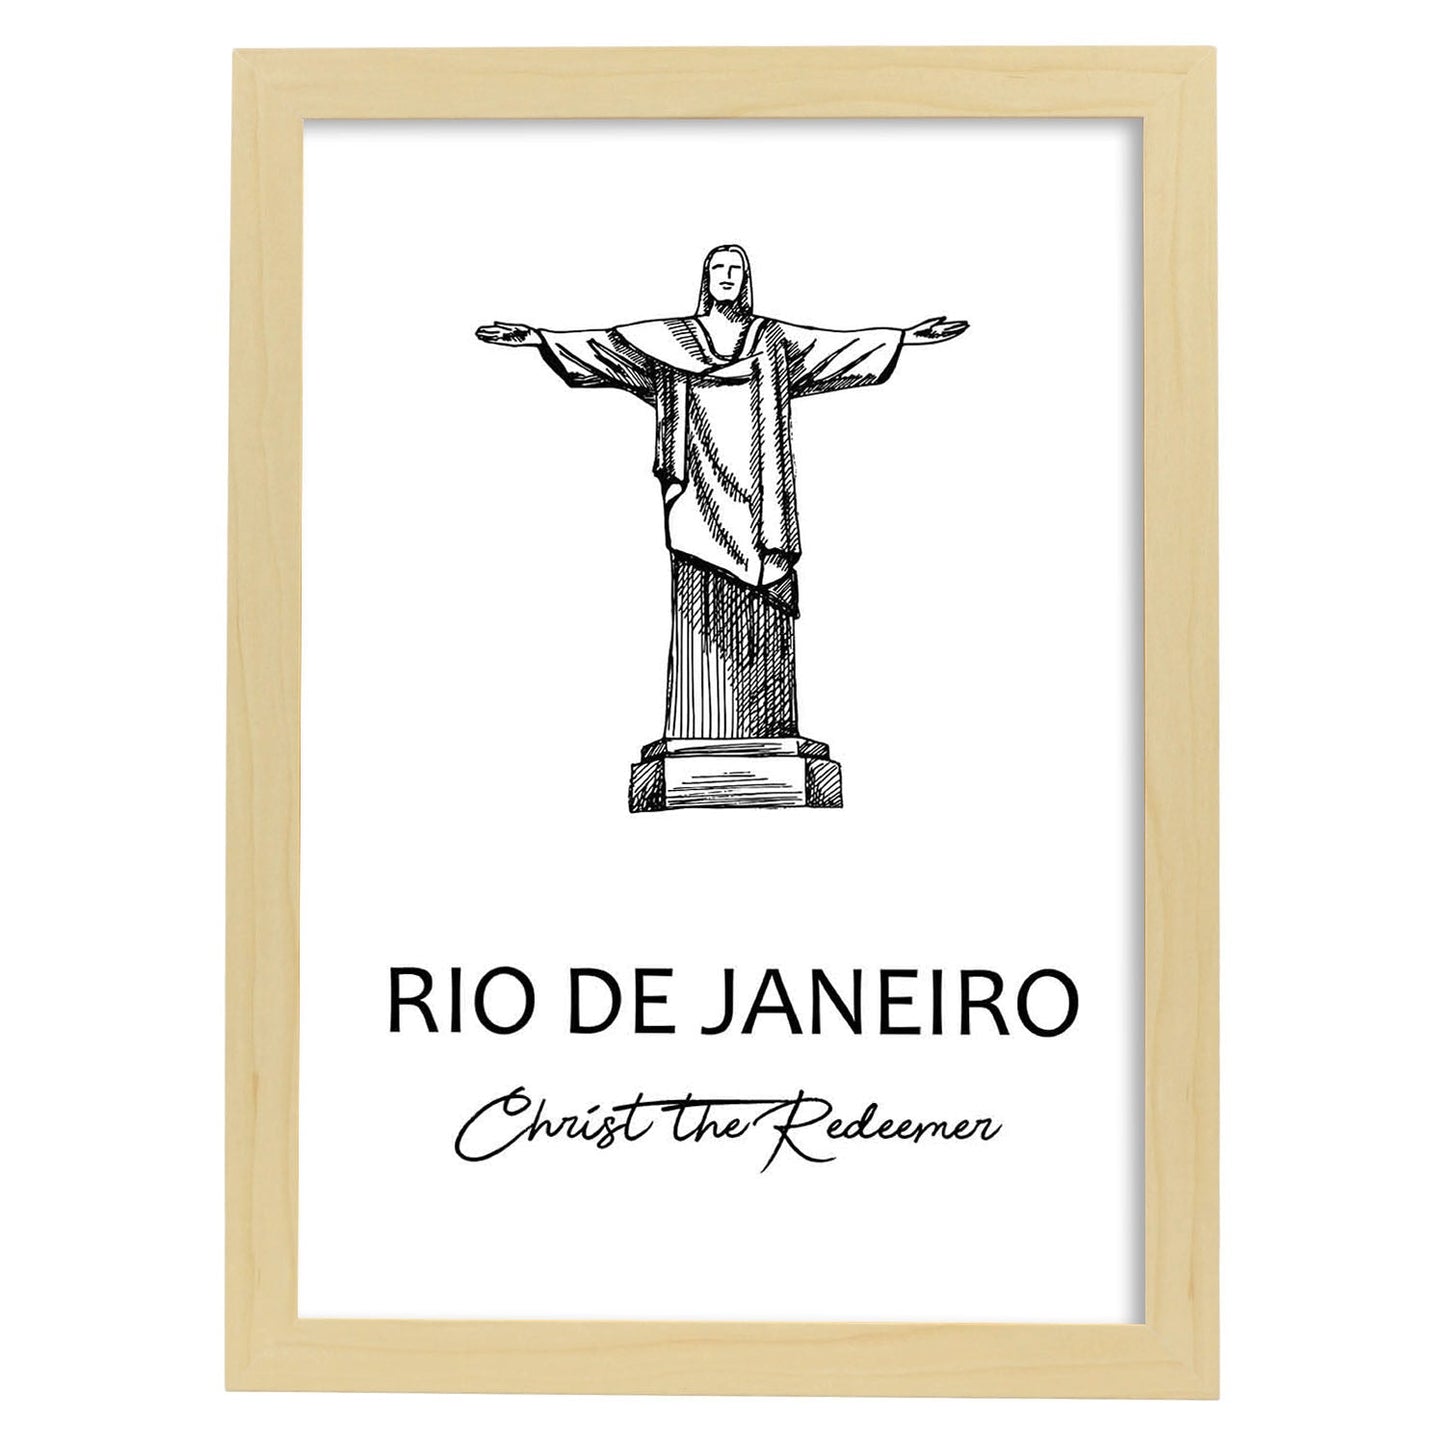 Poster de Rio de Janeiro - Cristo redentor. Láminas con monumentos de ciudades.-Artwork-Nacnic-A3-Marco Madera clara-Nacnic Estudio SL